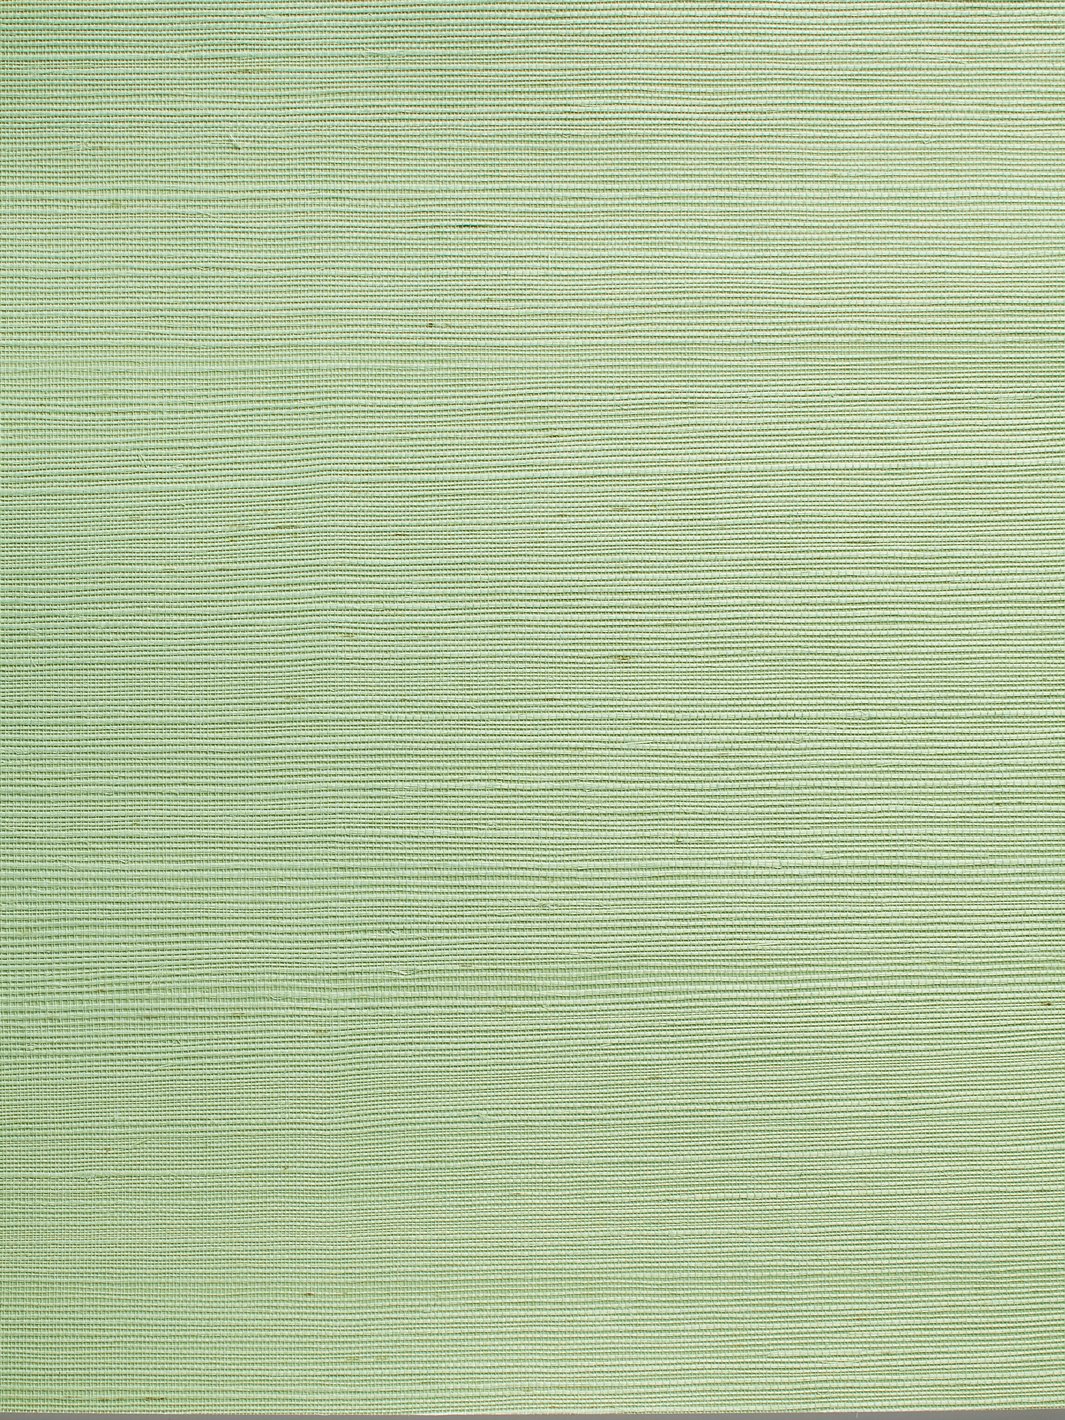 'Solid Grasscloth' Wallpaper by Wallshoppe - Spring Green